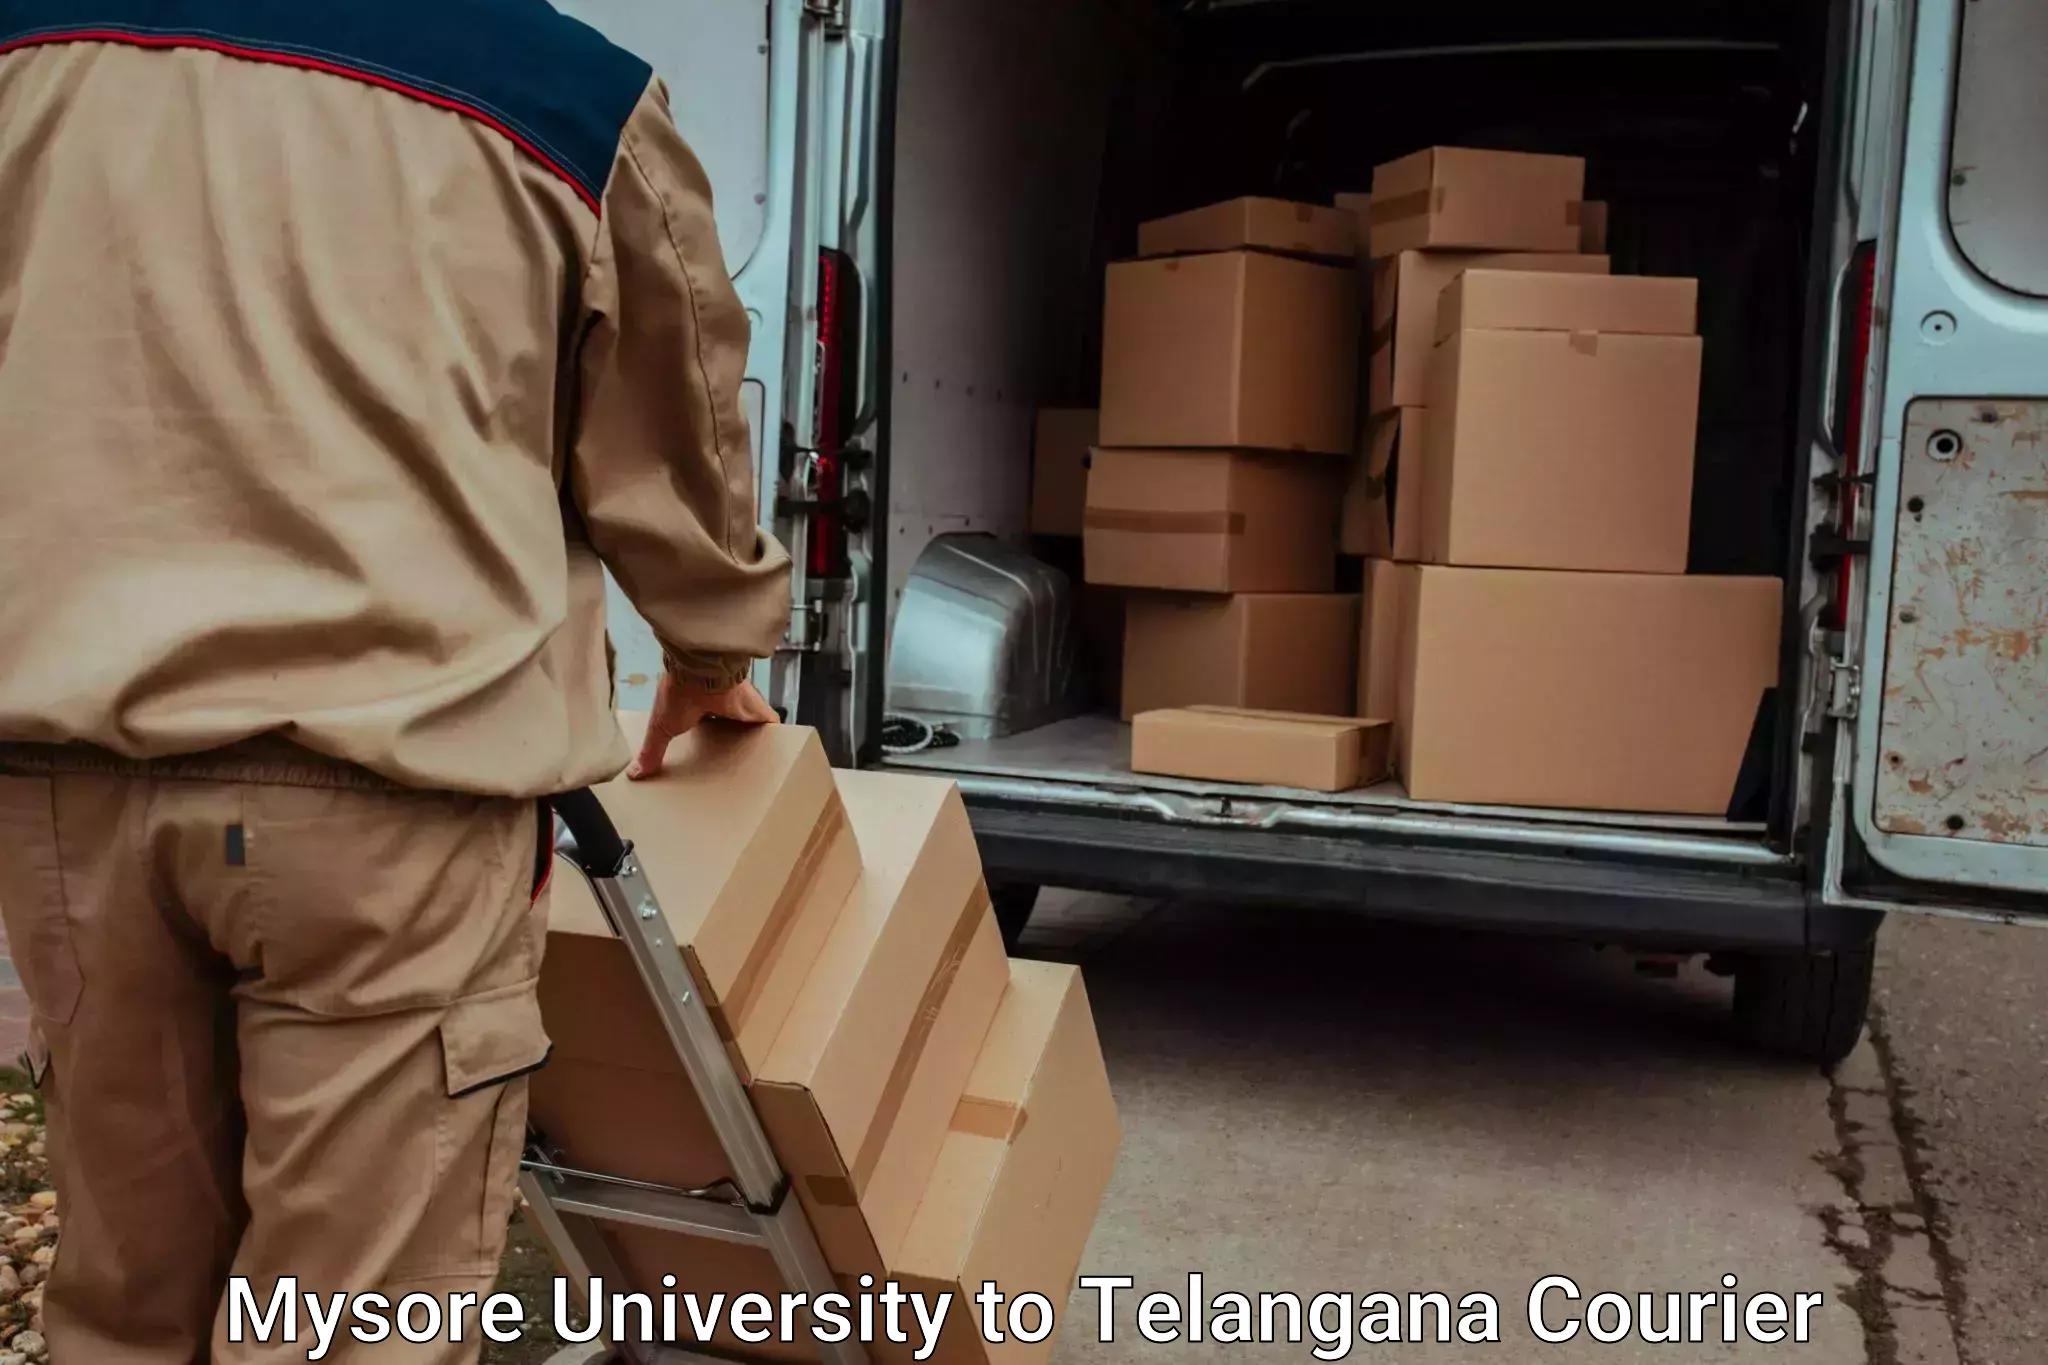 Furniture transport experts Mysore University to Balanagar